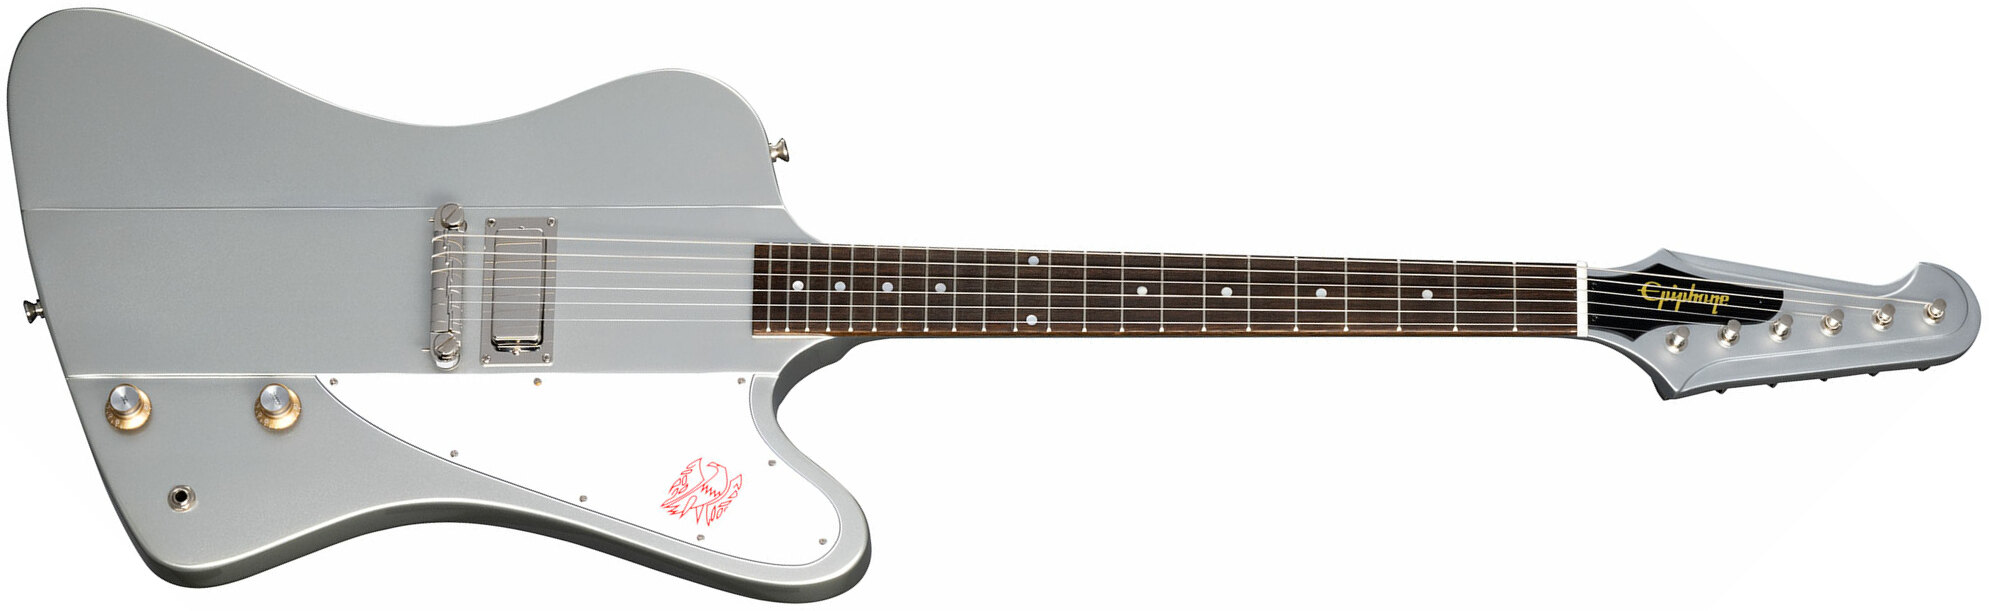 Epiphone Firebird I 1963 Inspired By Gibson Custom 1mh Ht Lau - Silver Mist - Retro-rock elektrische gitaar - Main picture